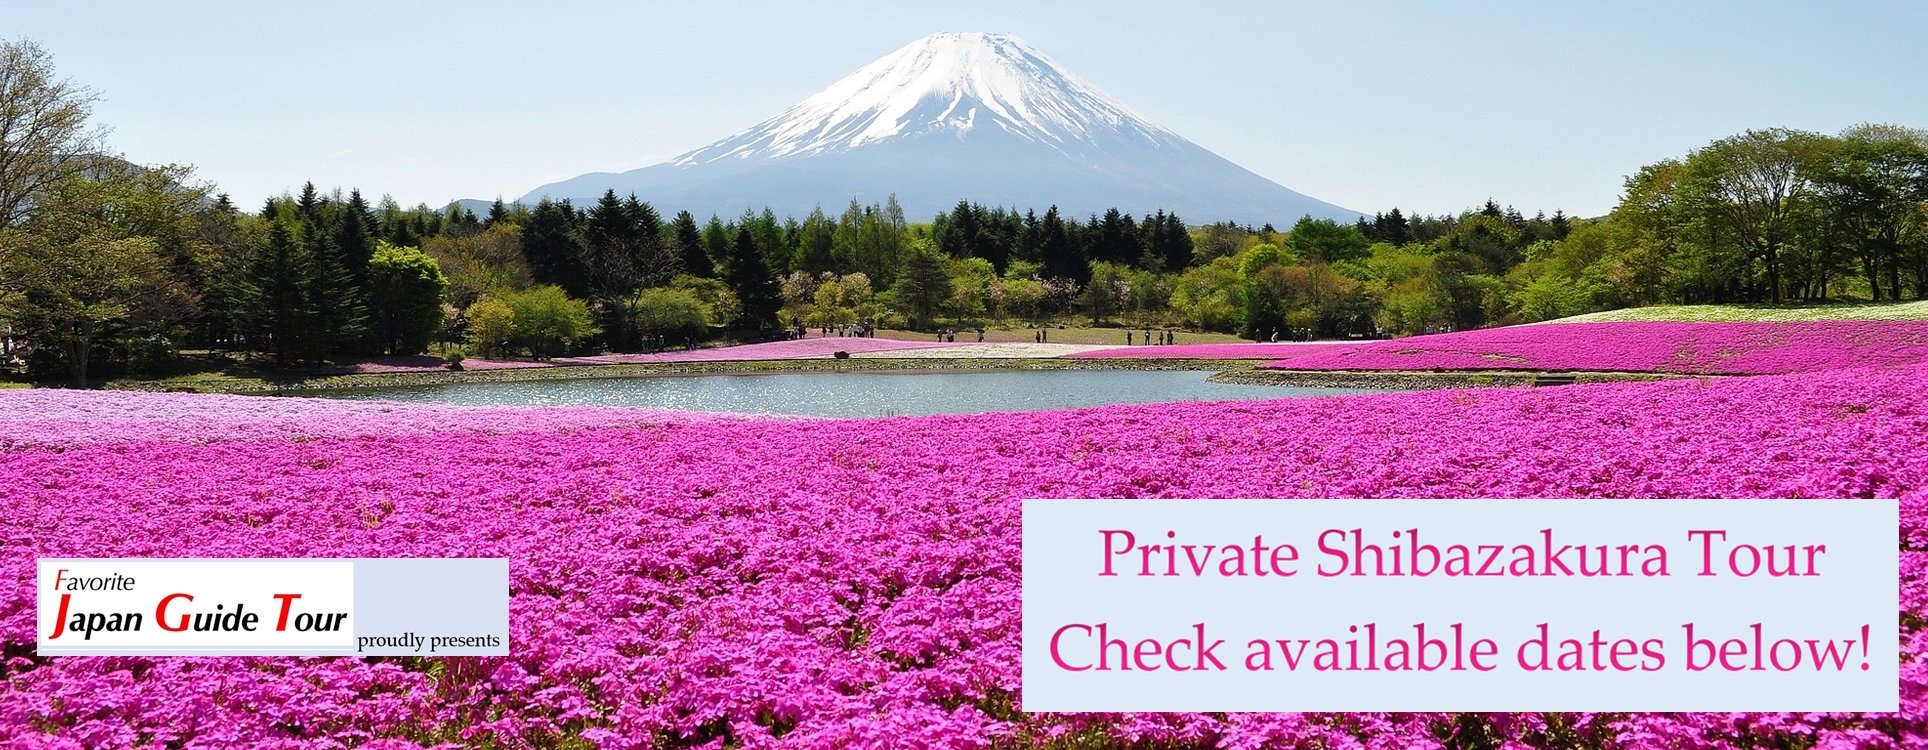 Shibazakura Private Group Tour. Favorite Japan Guide Tour